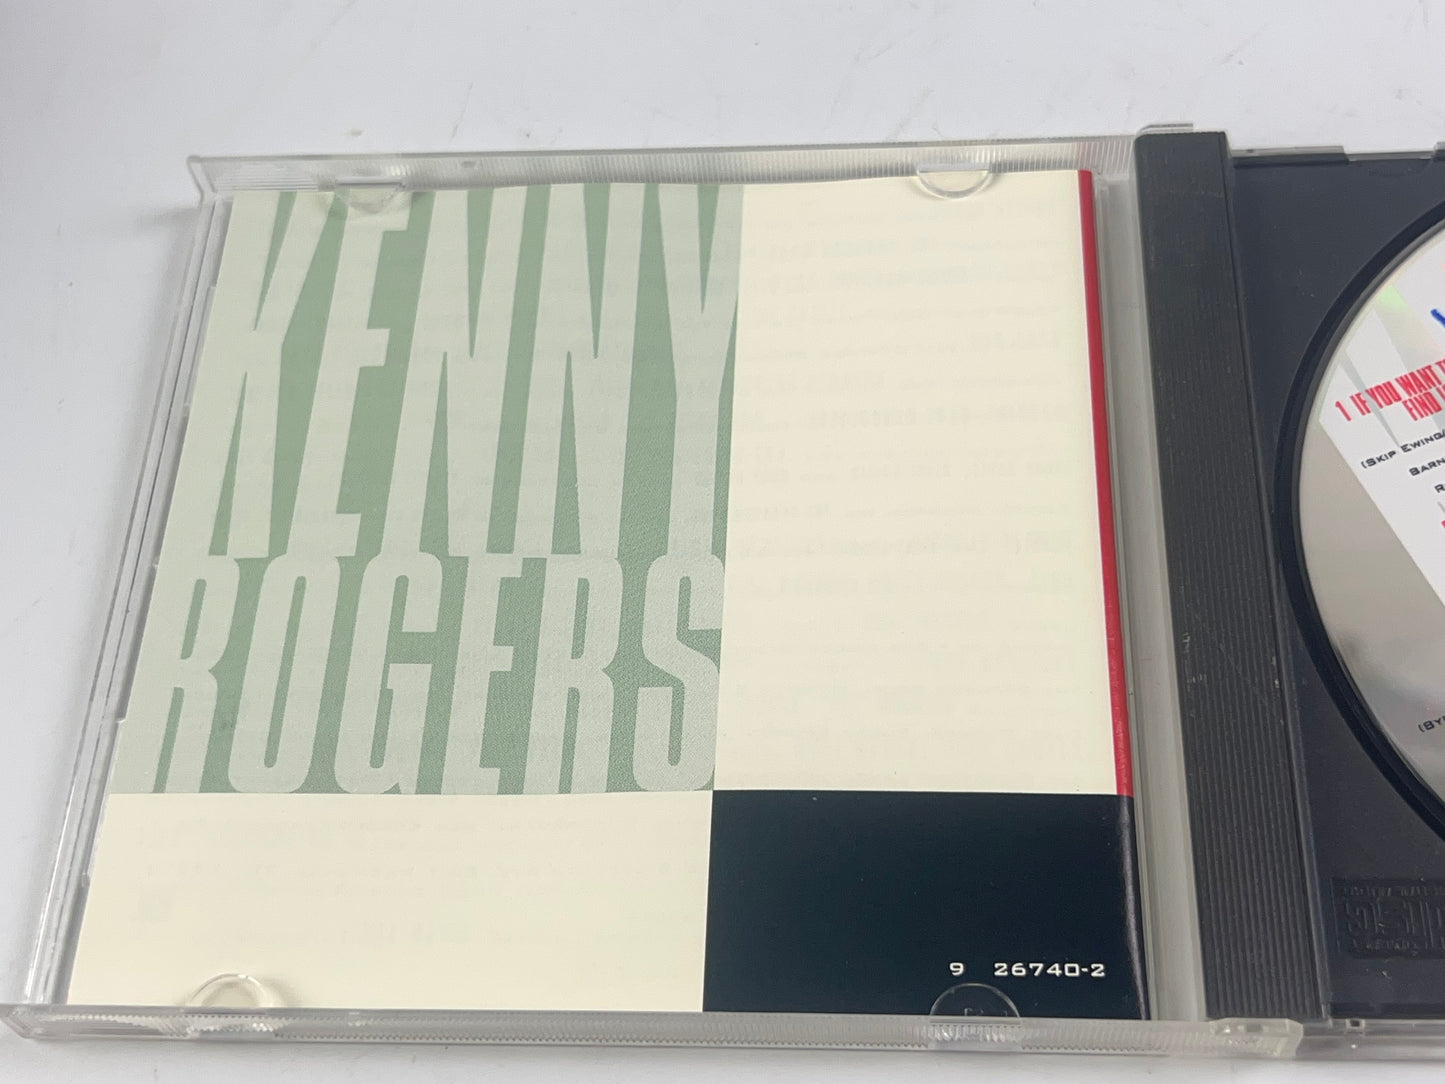 Kenny Rogers : Back Home Again CD